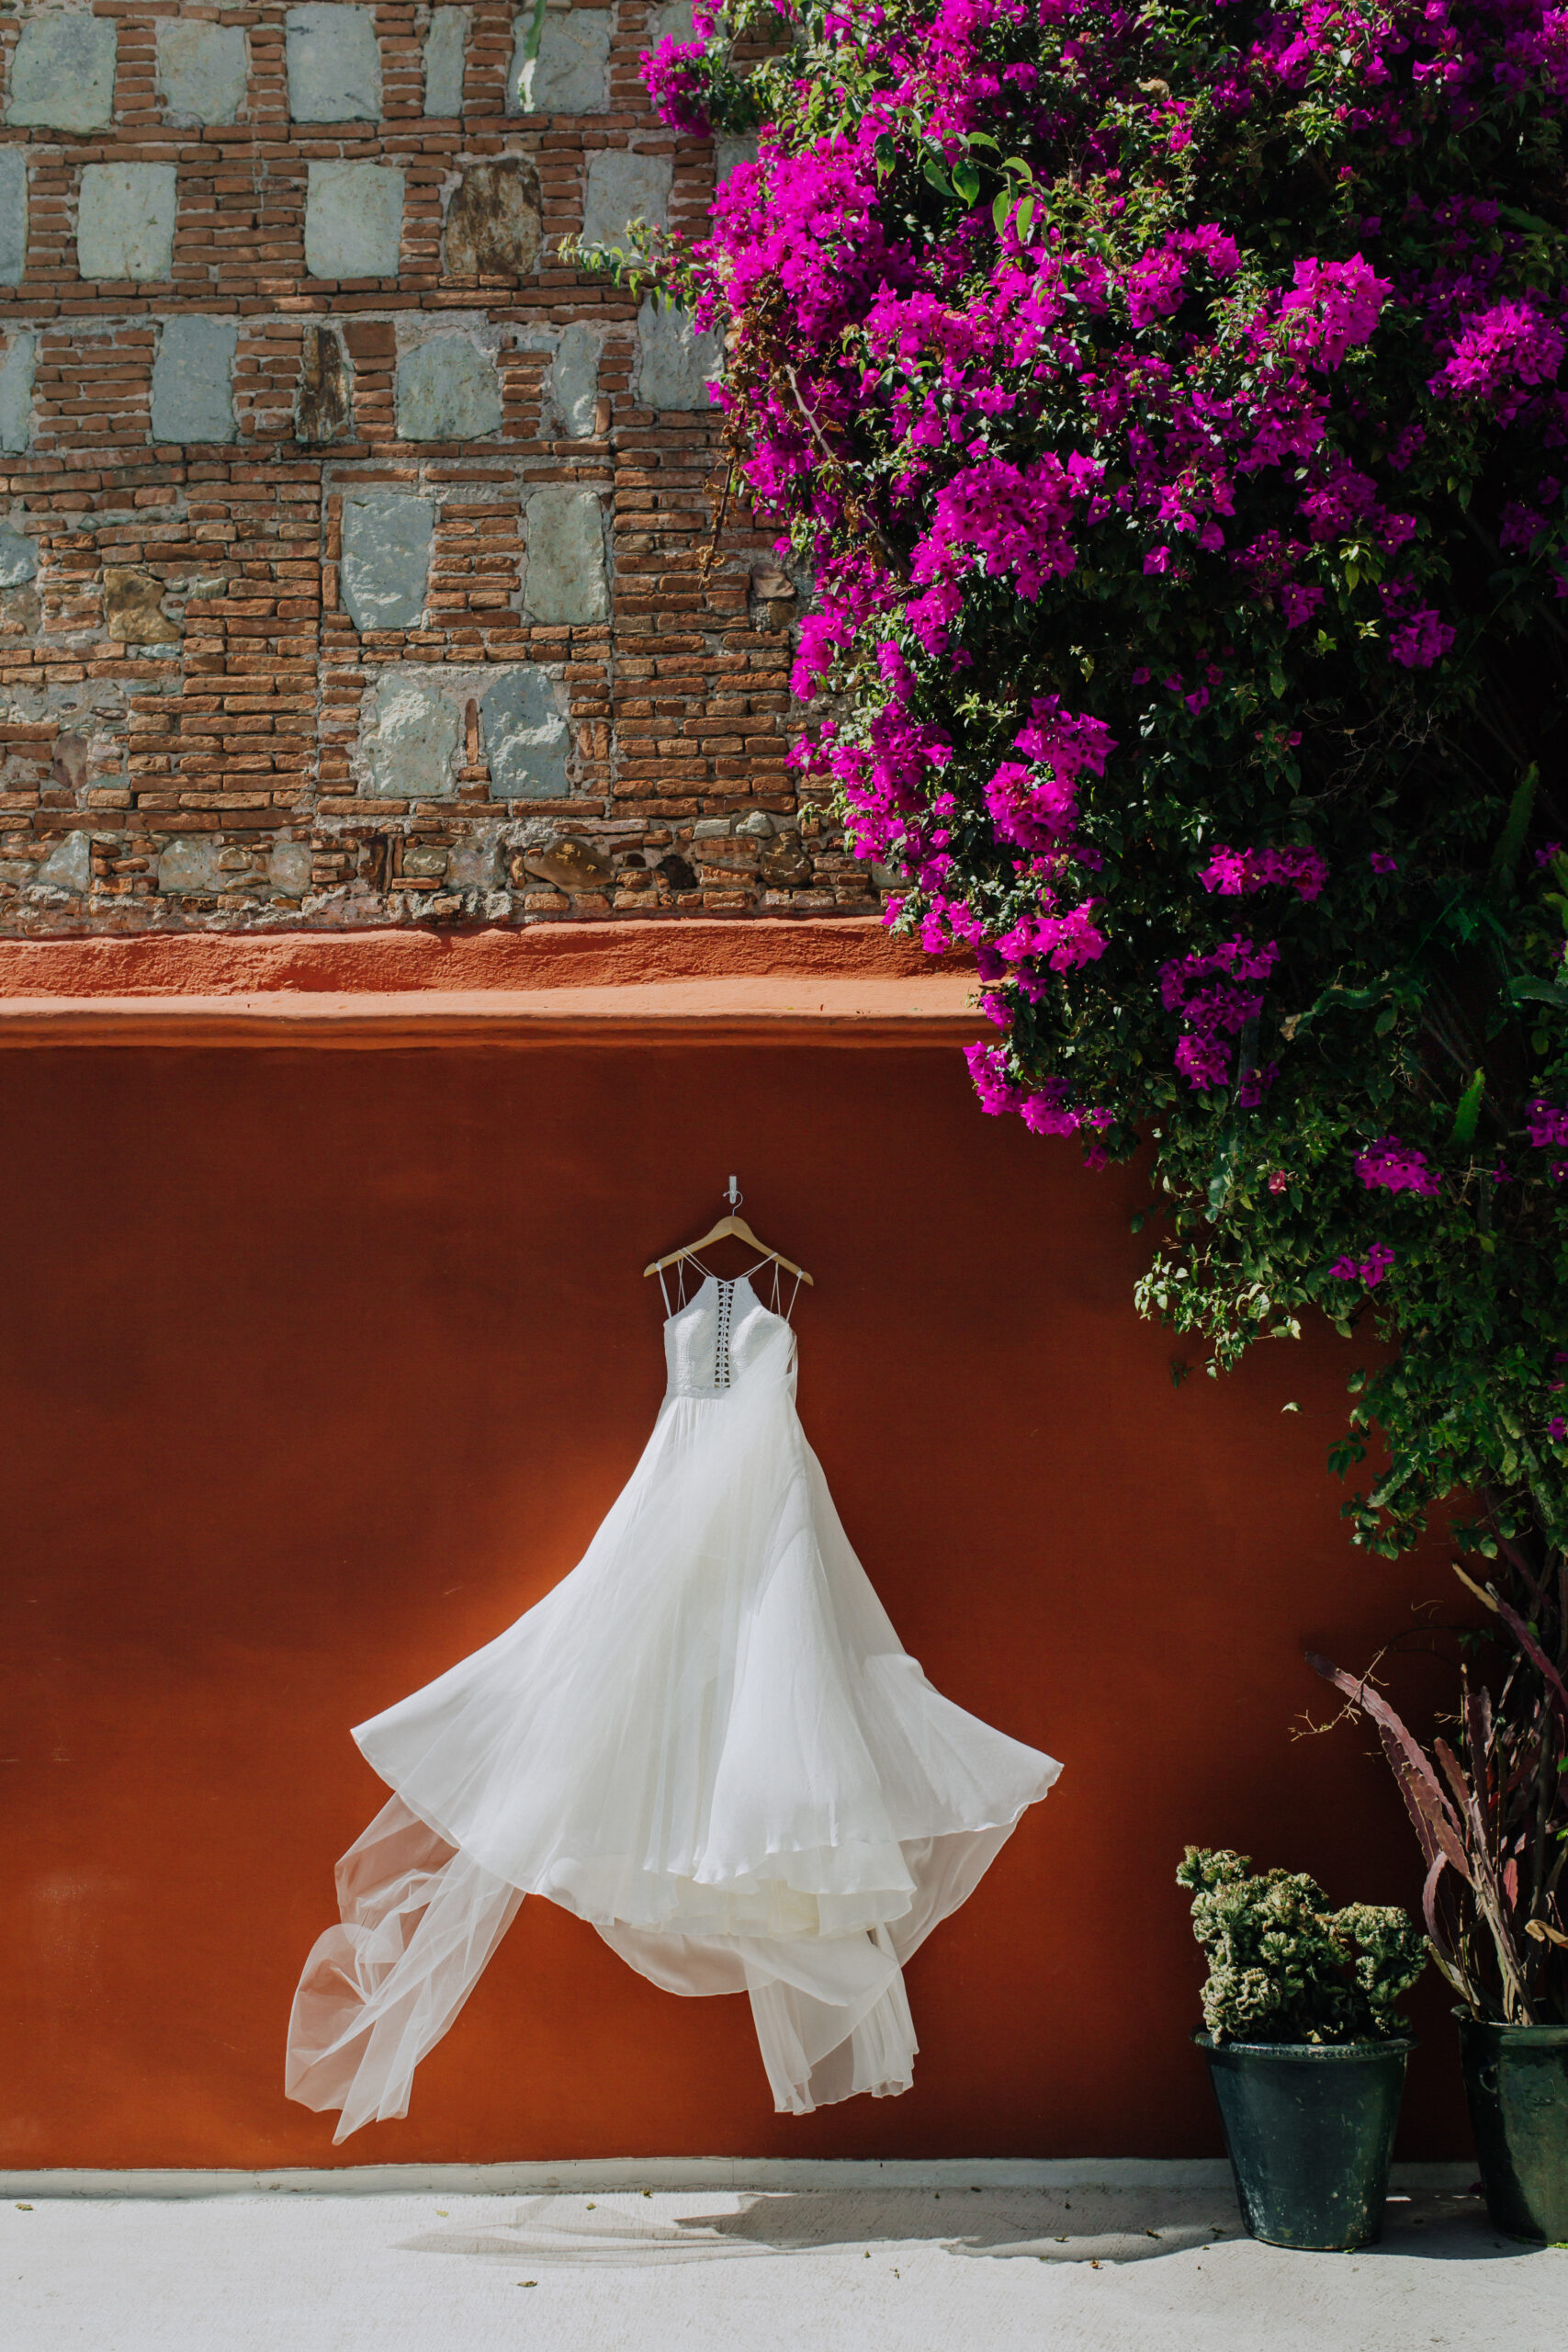 brides dress hangs up against an orange wall 